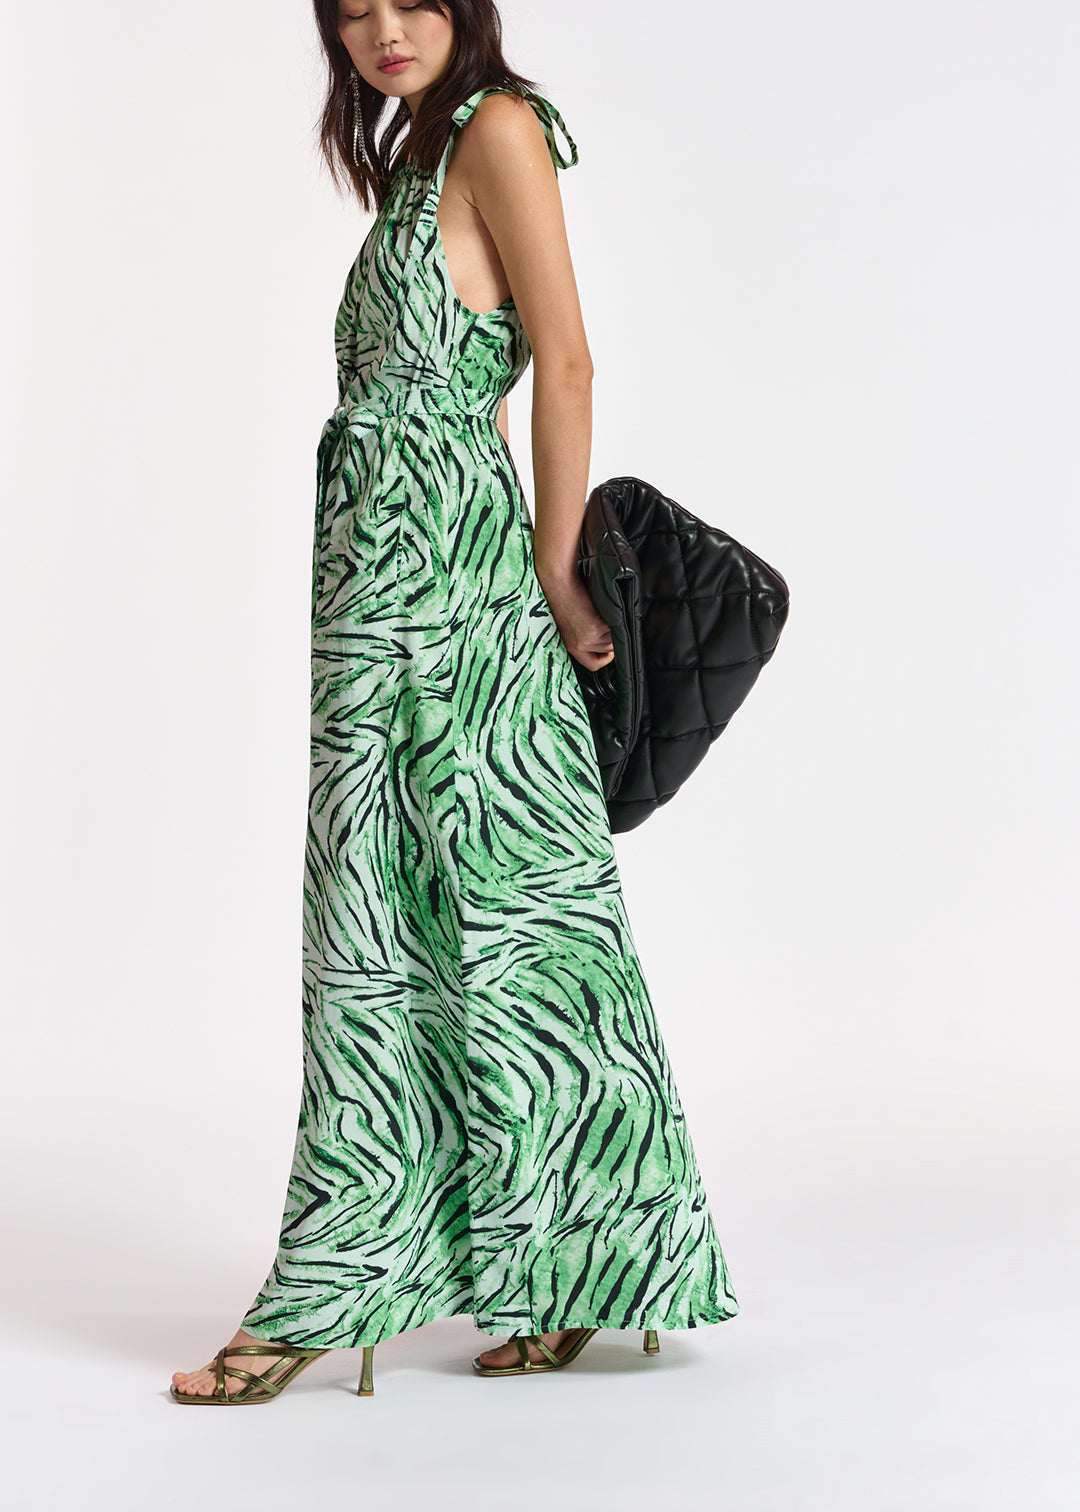 Mint green halter neck maxi dress with tiger print